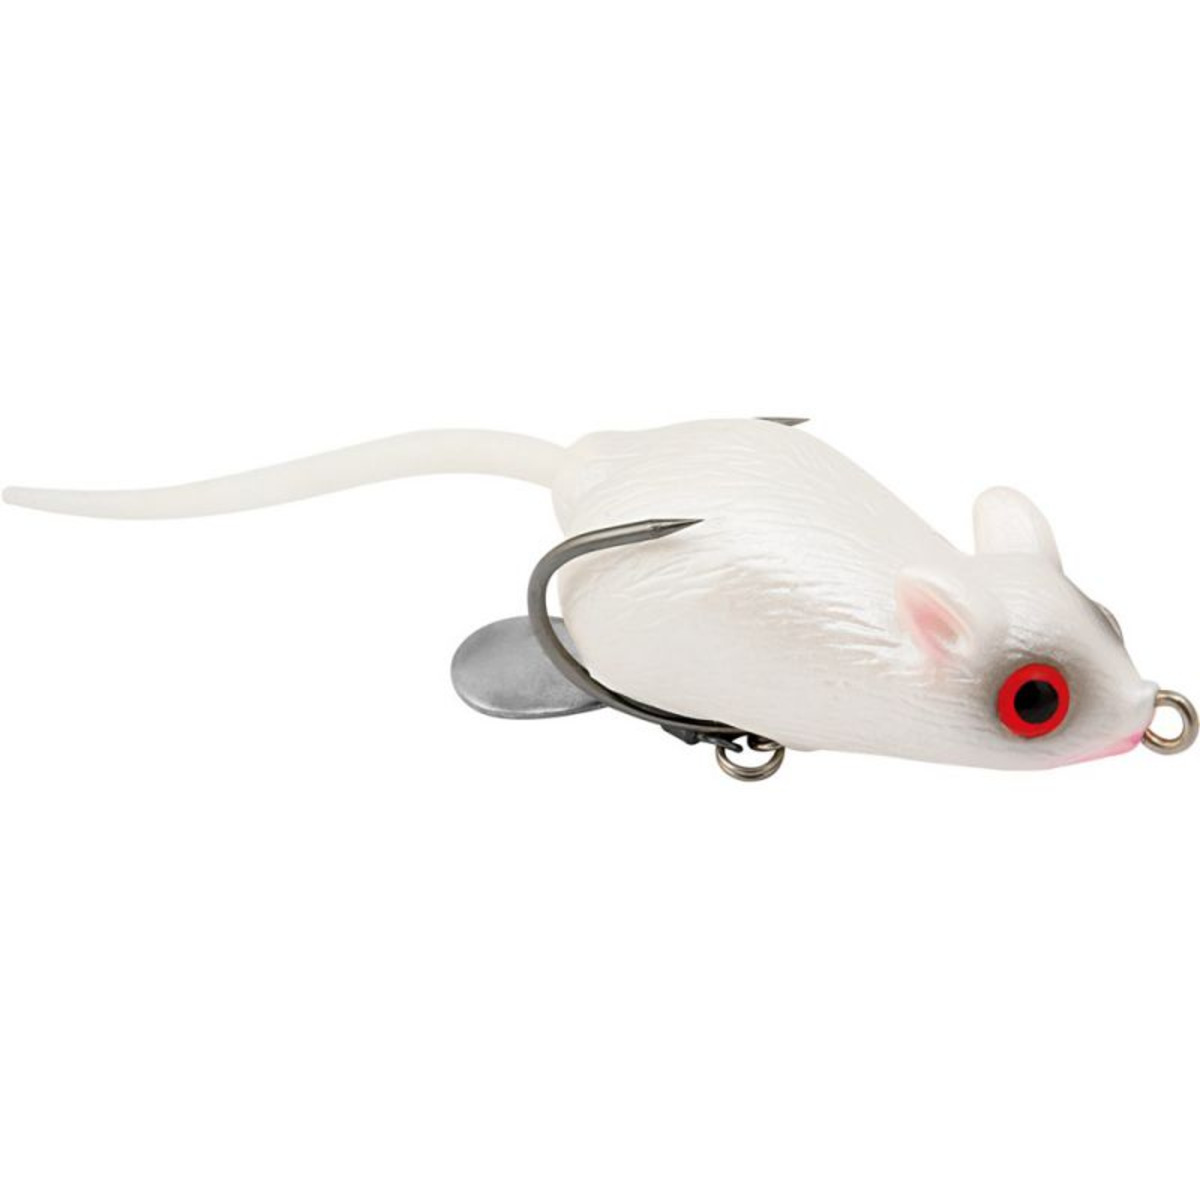 Rapture Dancer Mouse - 14.0 g - 65 mm - Albino